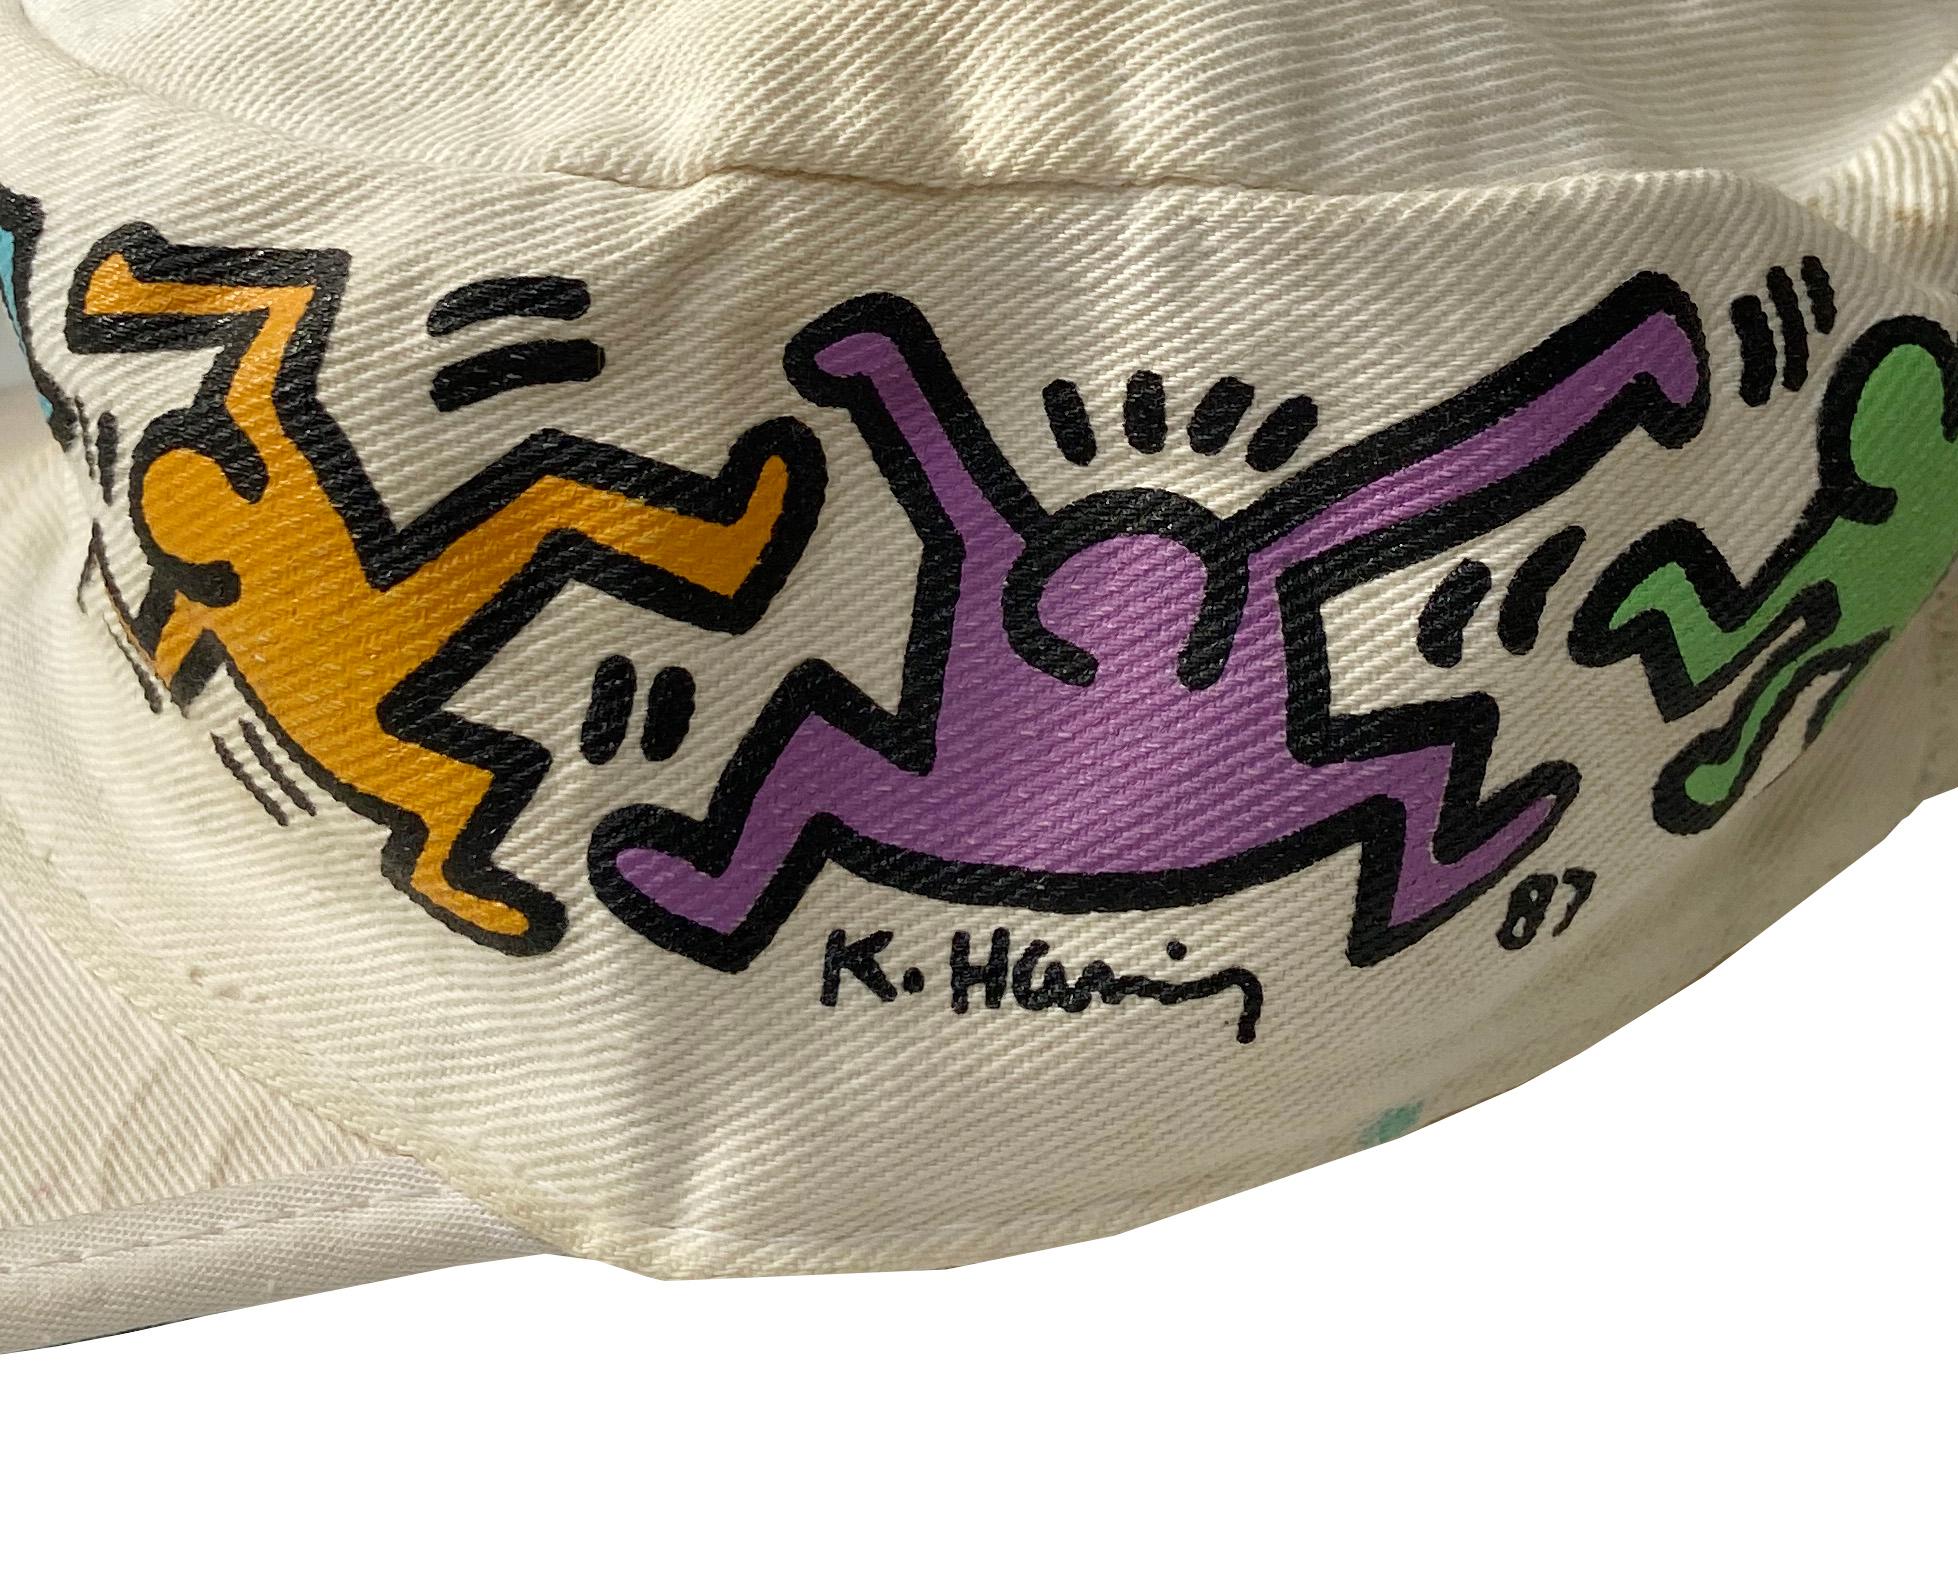 Keith Haring - Original 1980's Keith Haring Pop Shop hats (set of 